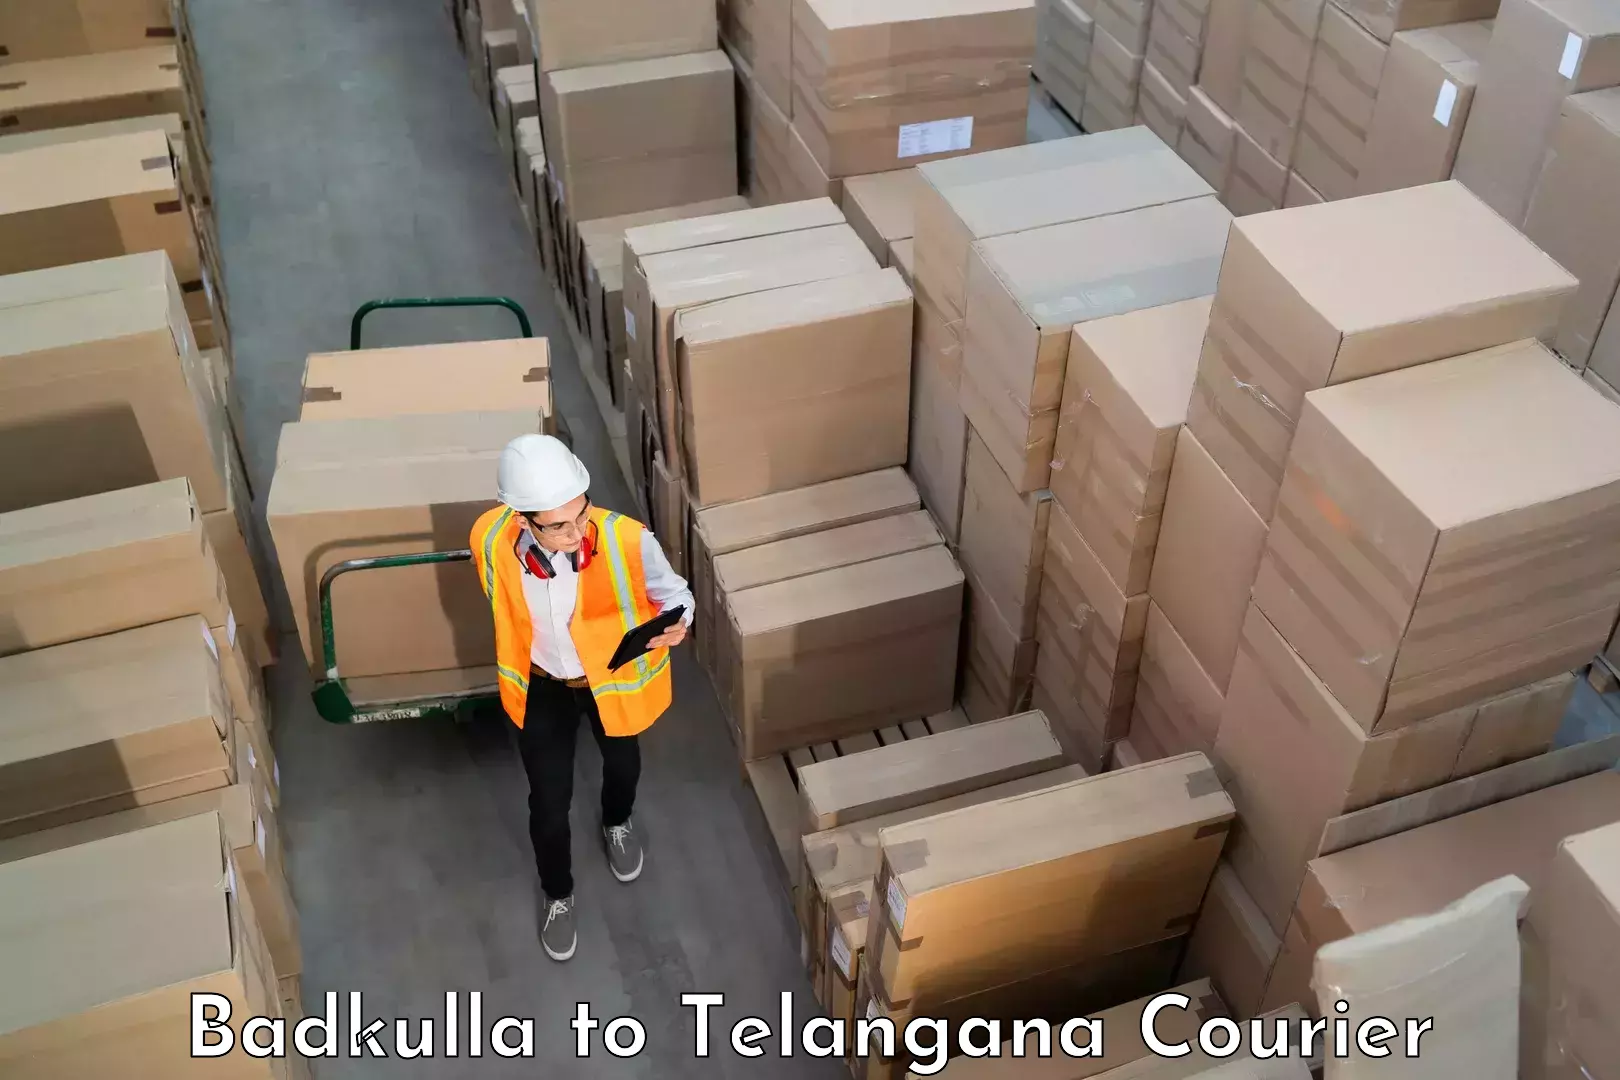 Baggage delivery scheduling Badkulla to Manuguru